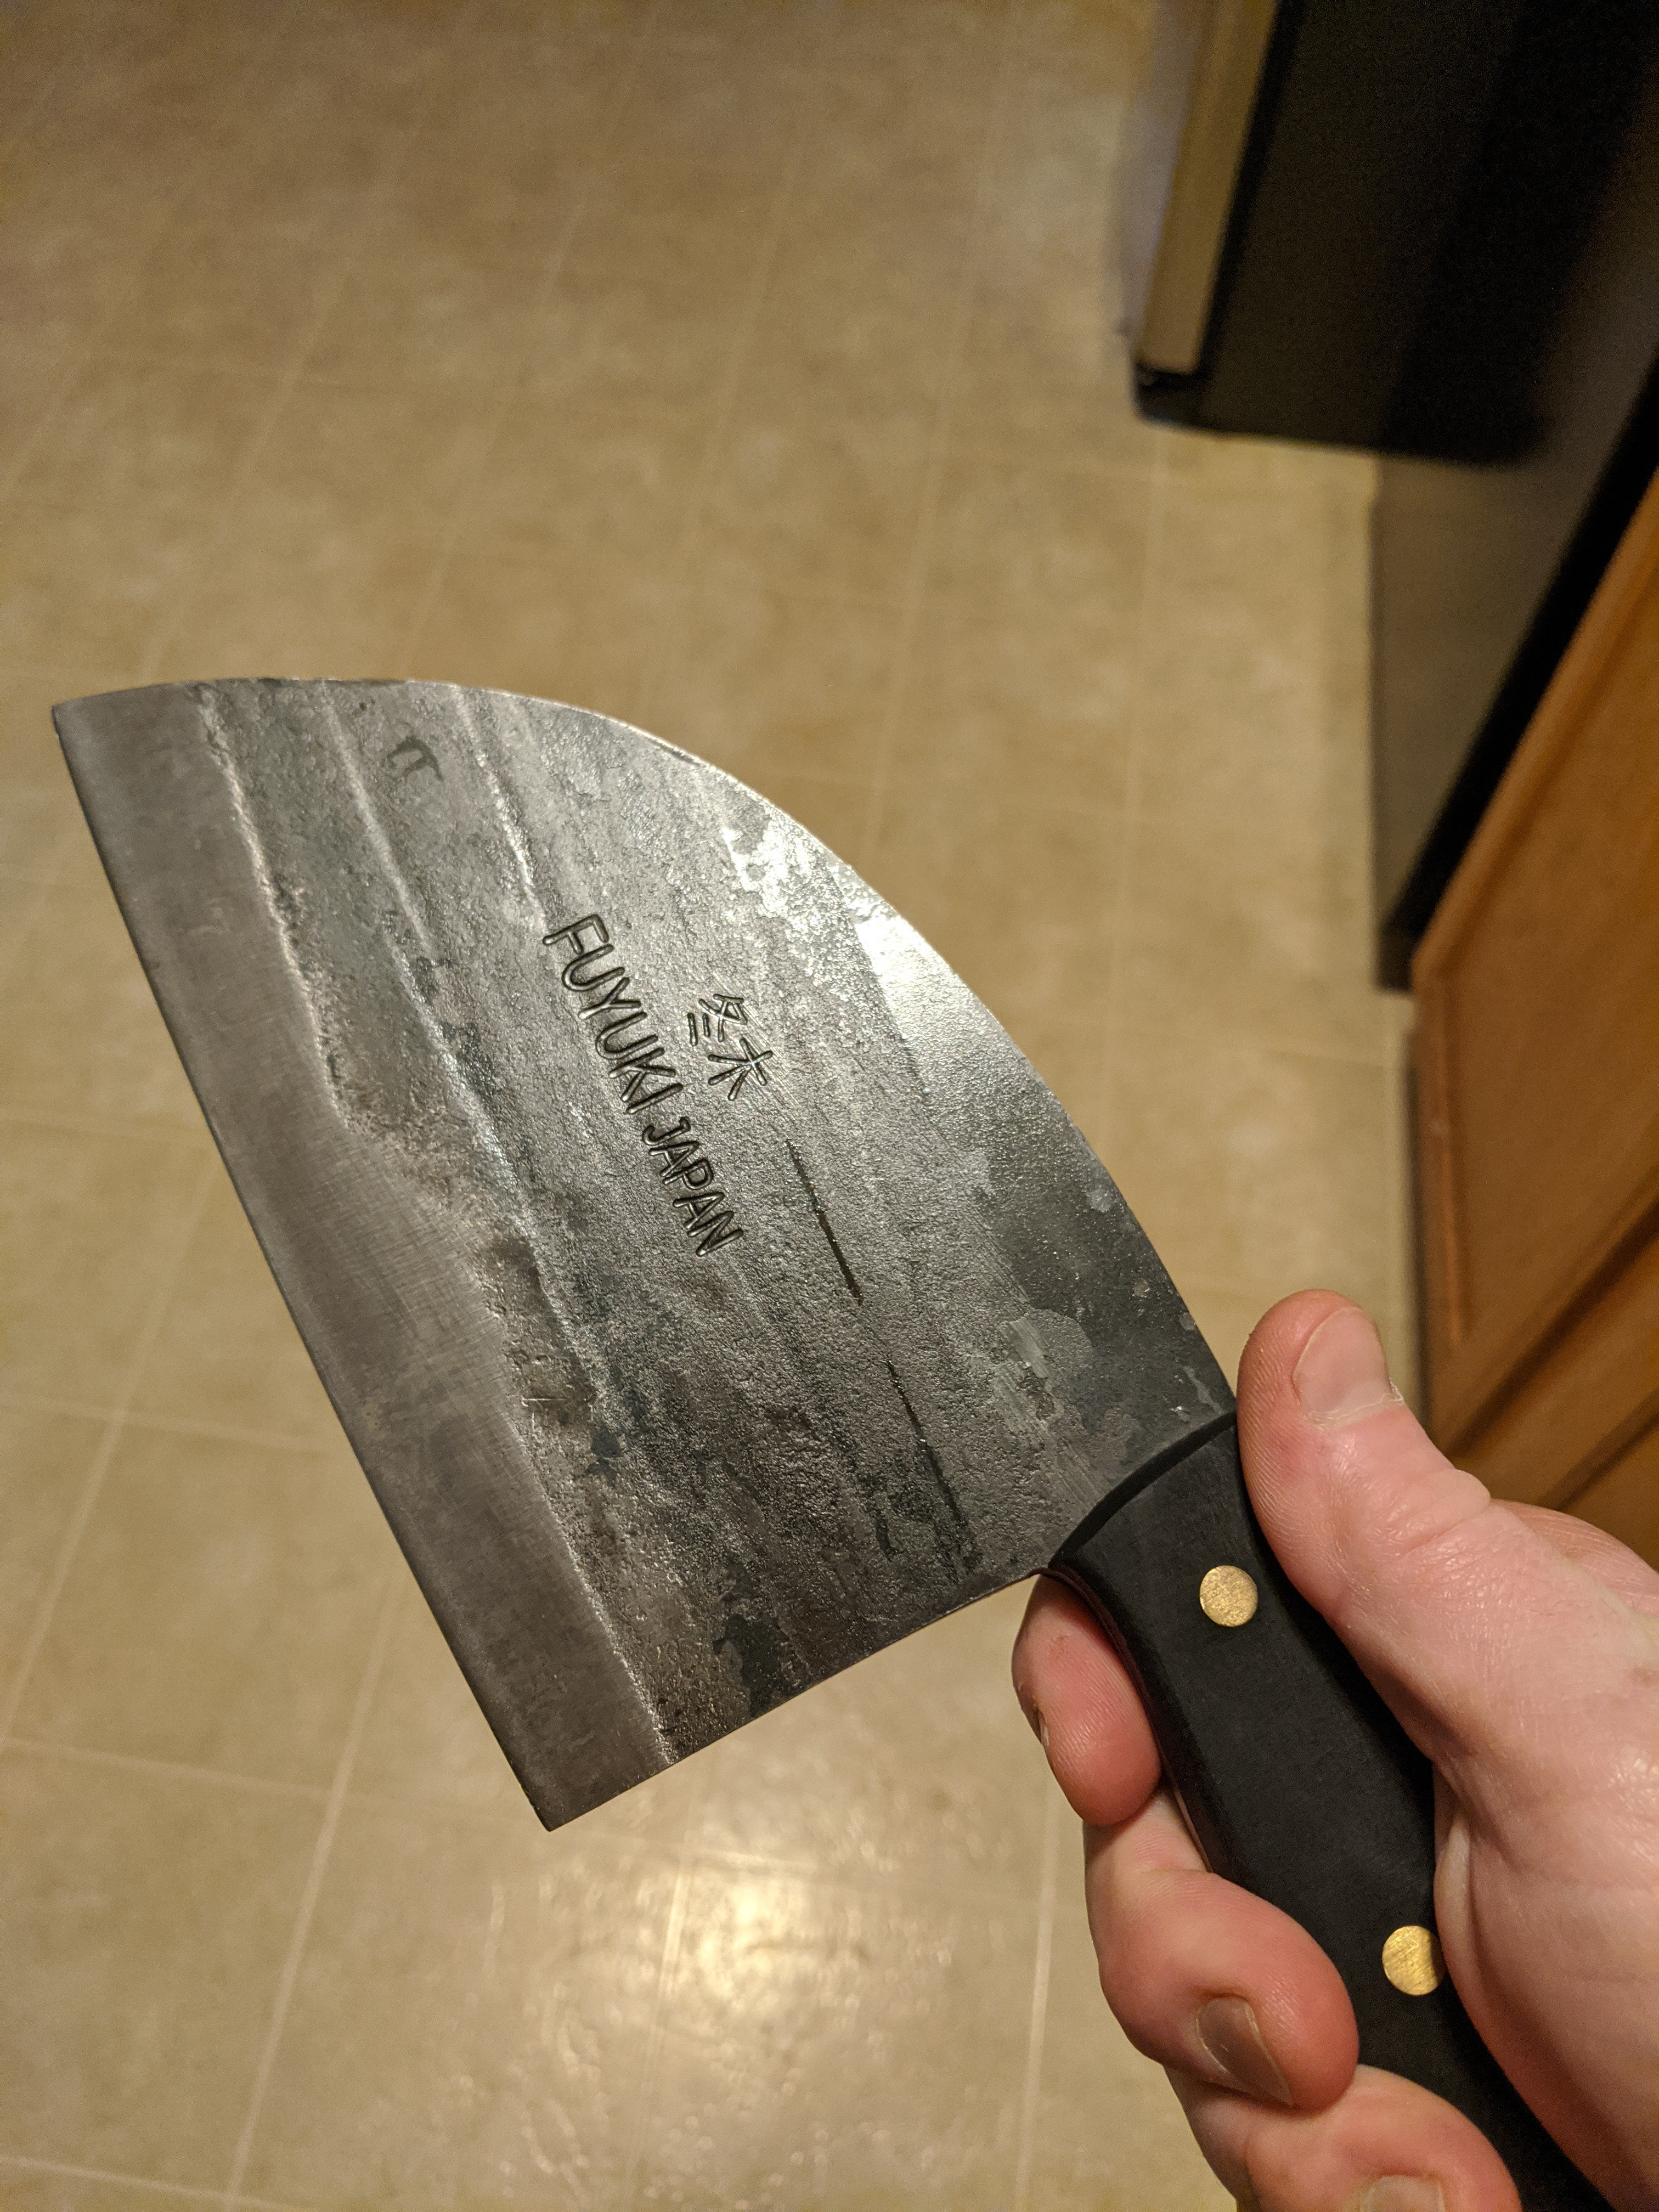 8'' Serbian Butcher Knife – RITSU Knife